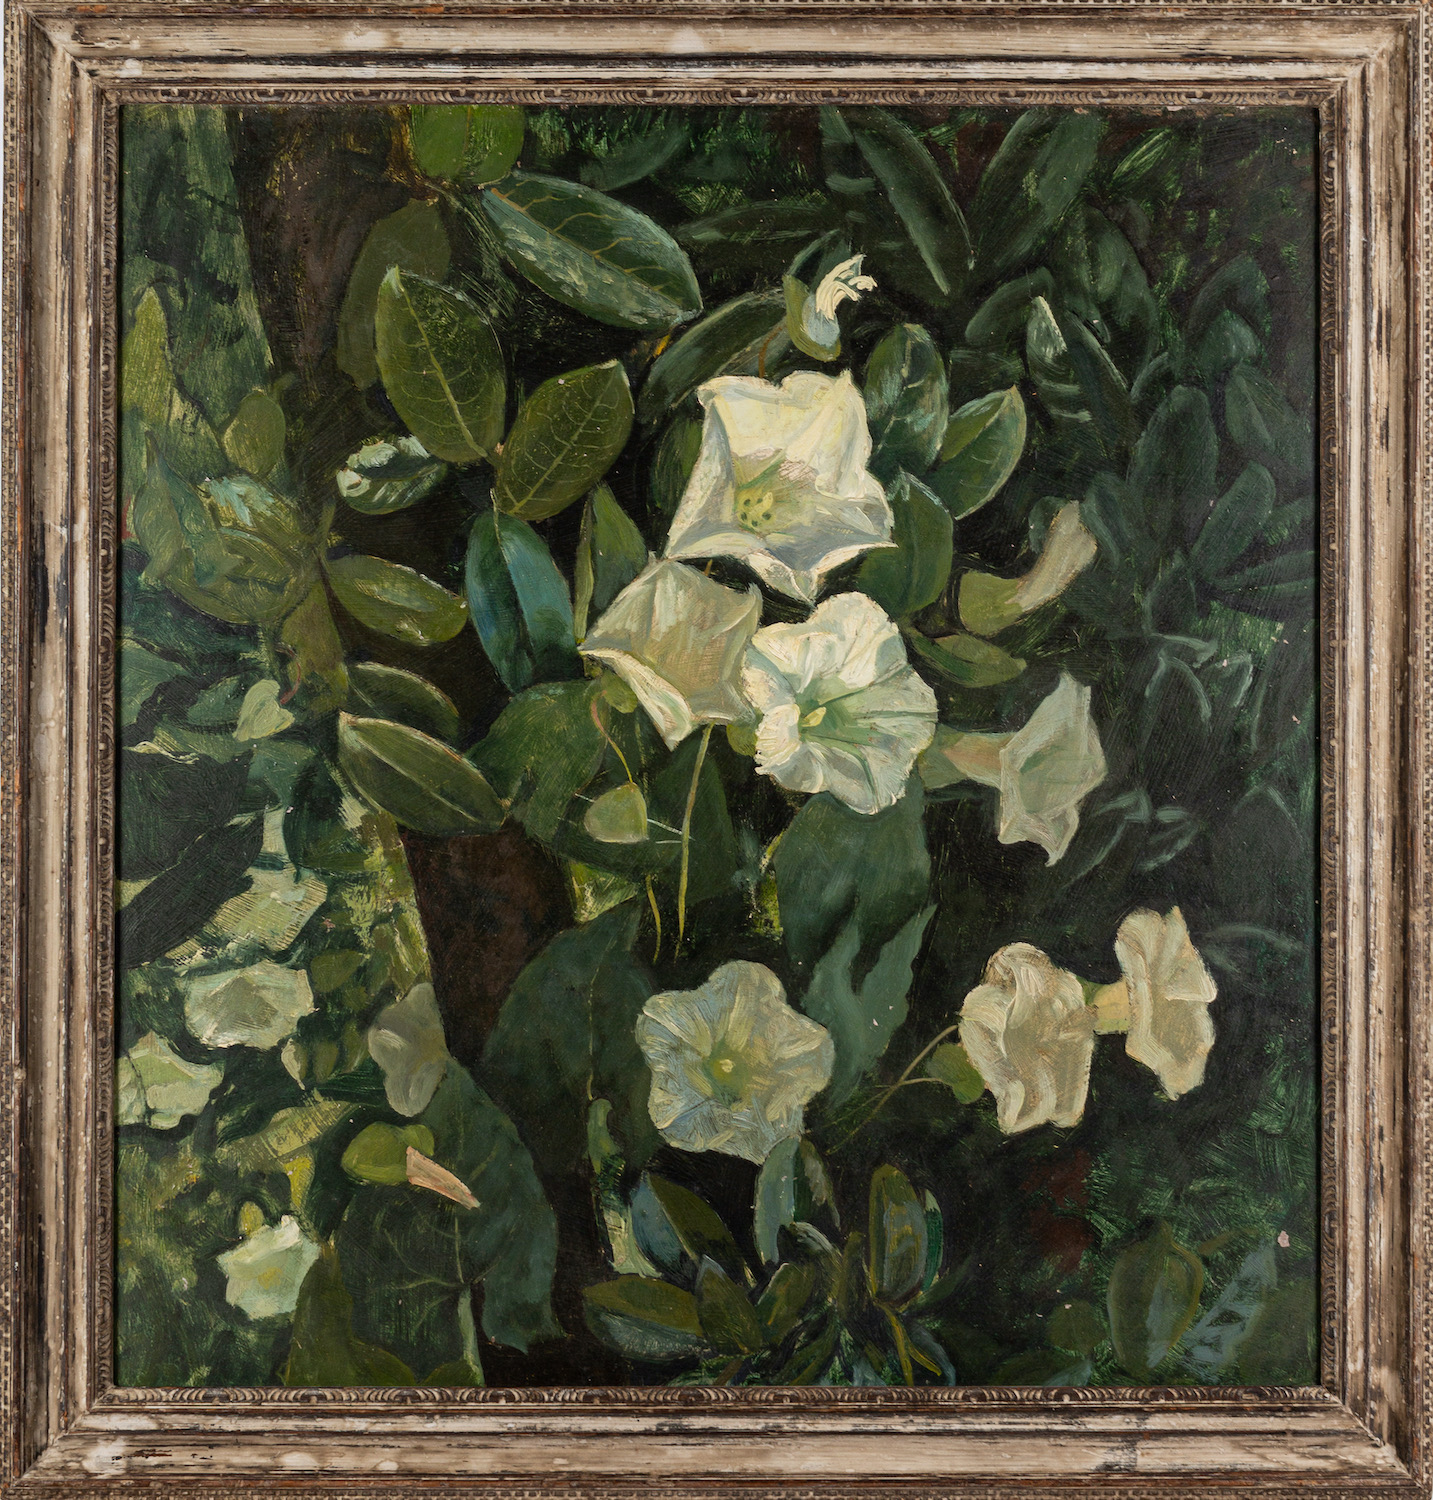 Five flower studies, one by G. Bordewich (20th Century) - Summer bouquet - Oil on board - 60 x 48. - Image 3 of 5